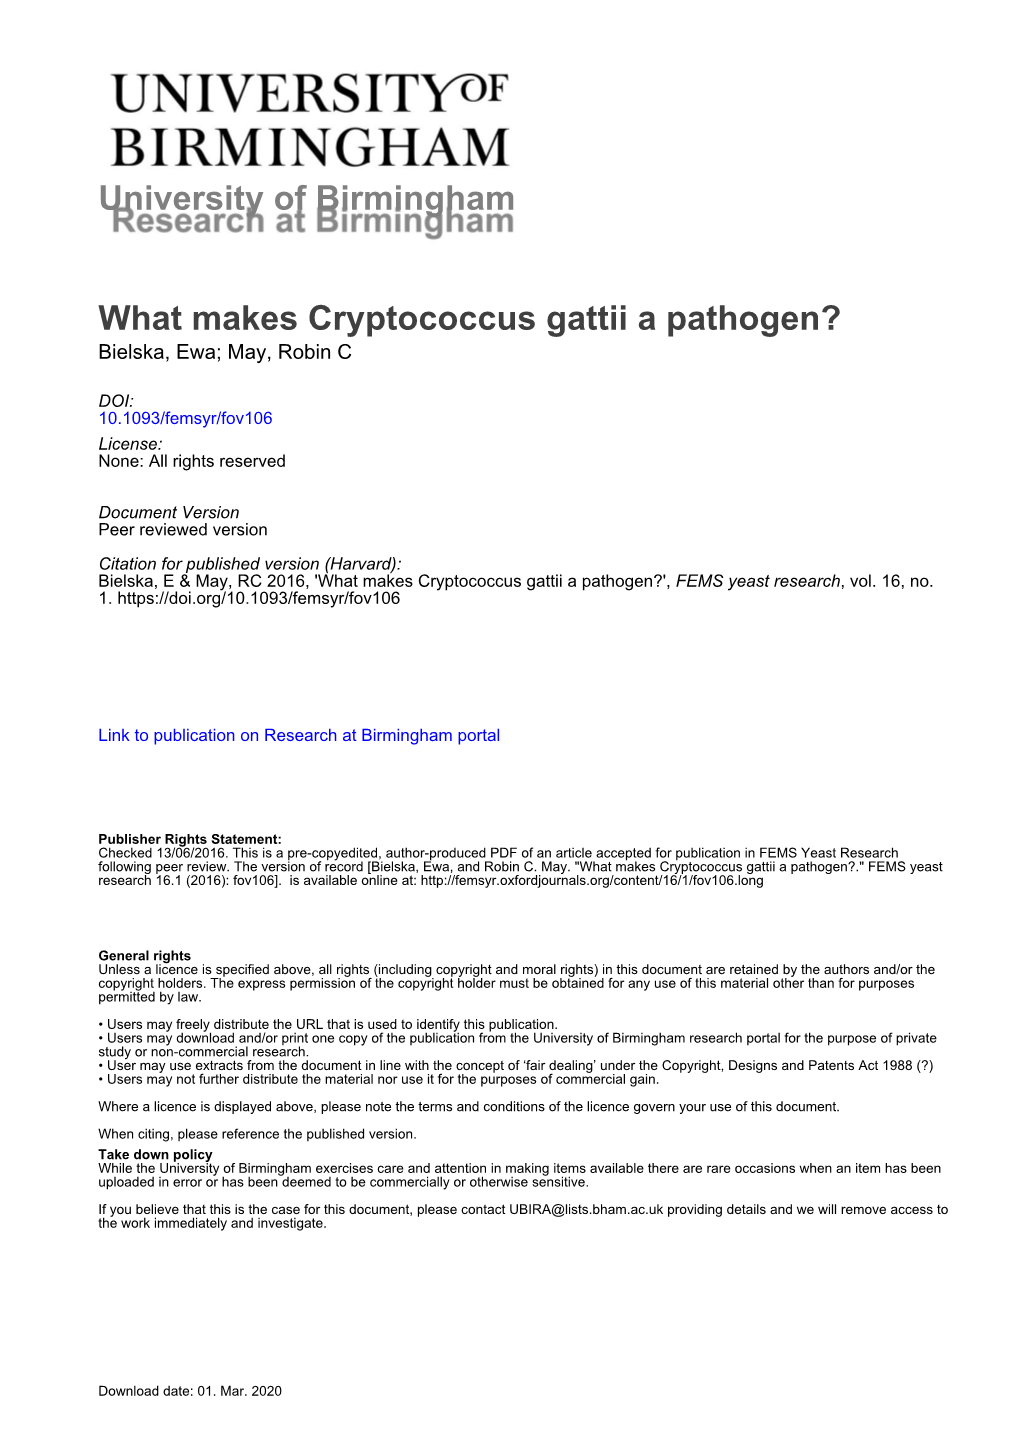 University of Birmingham What Makes Cryptococcus Gattii a Pathogen?